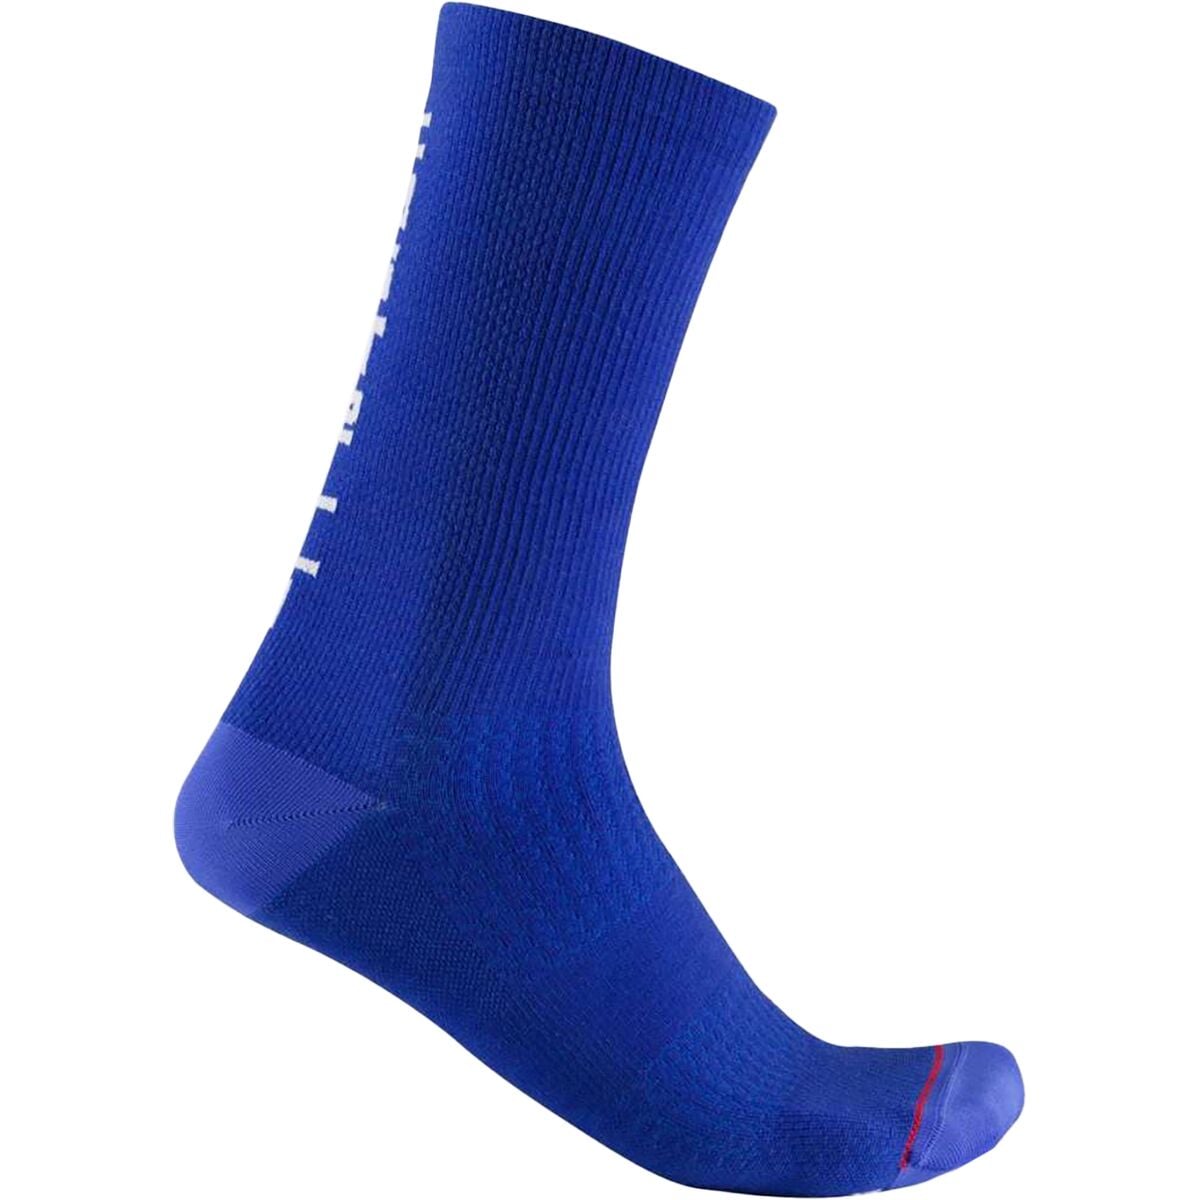 Castelli Bandito Wool 18 Sock Vivid Blue, XXL - Men's